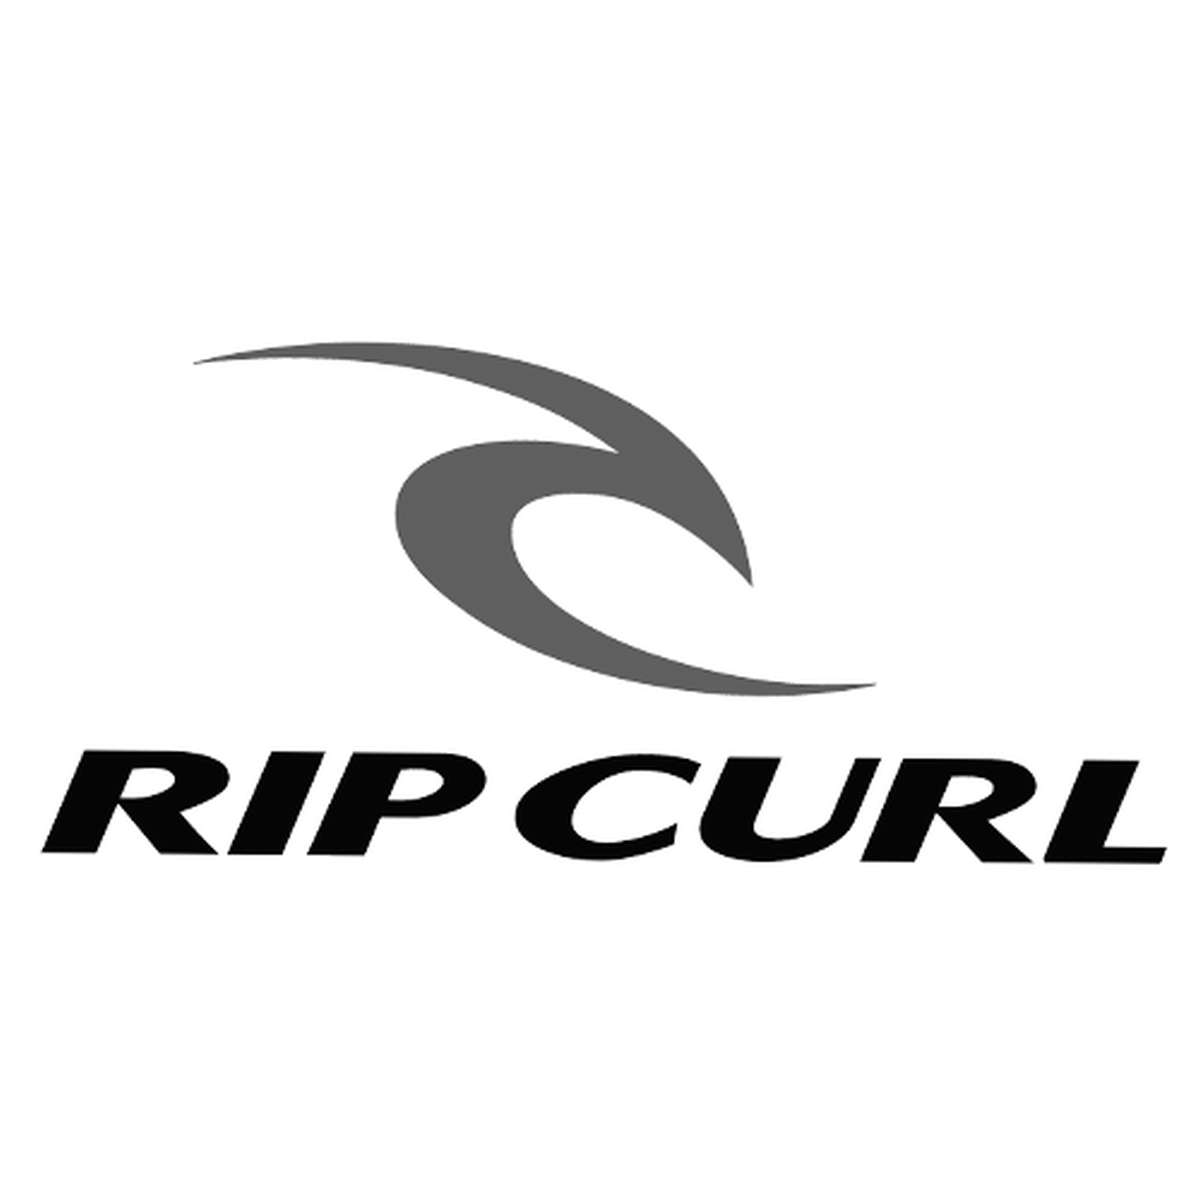 Rip curl